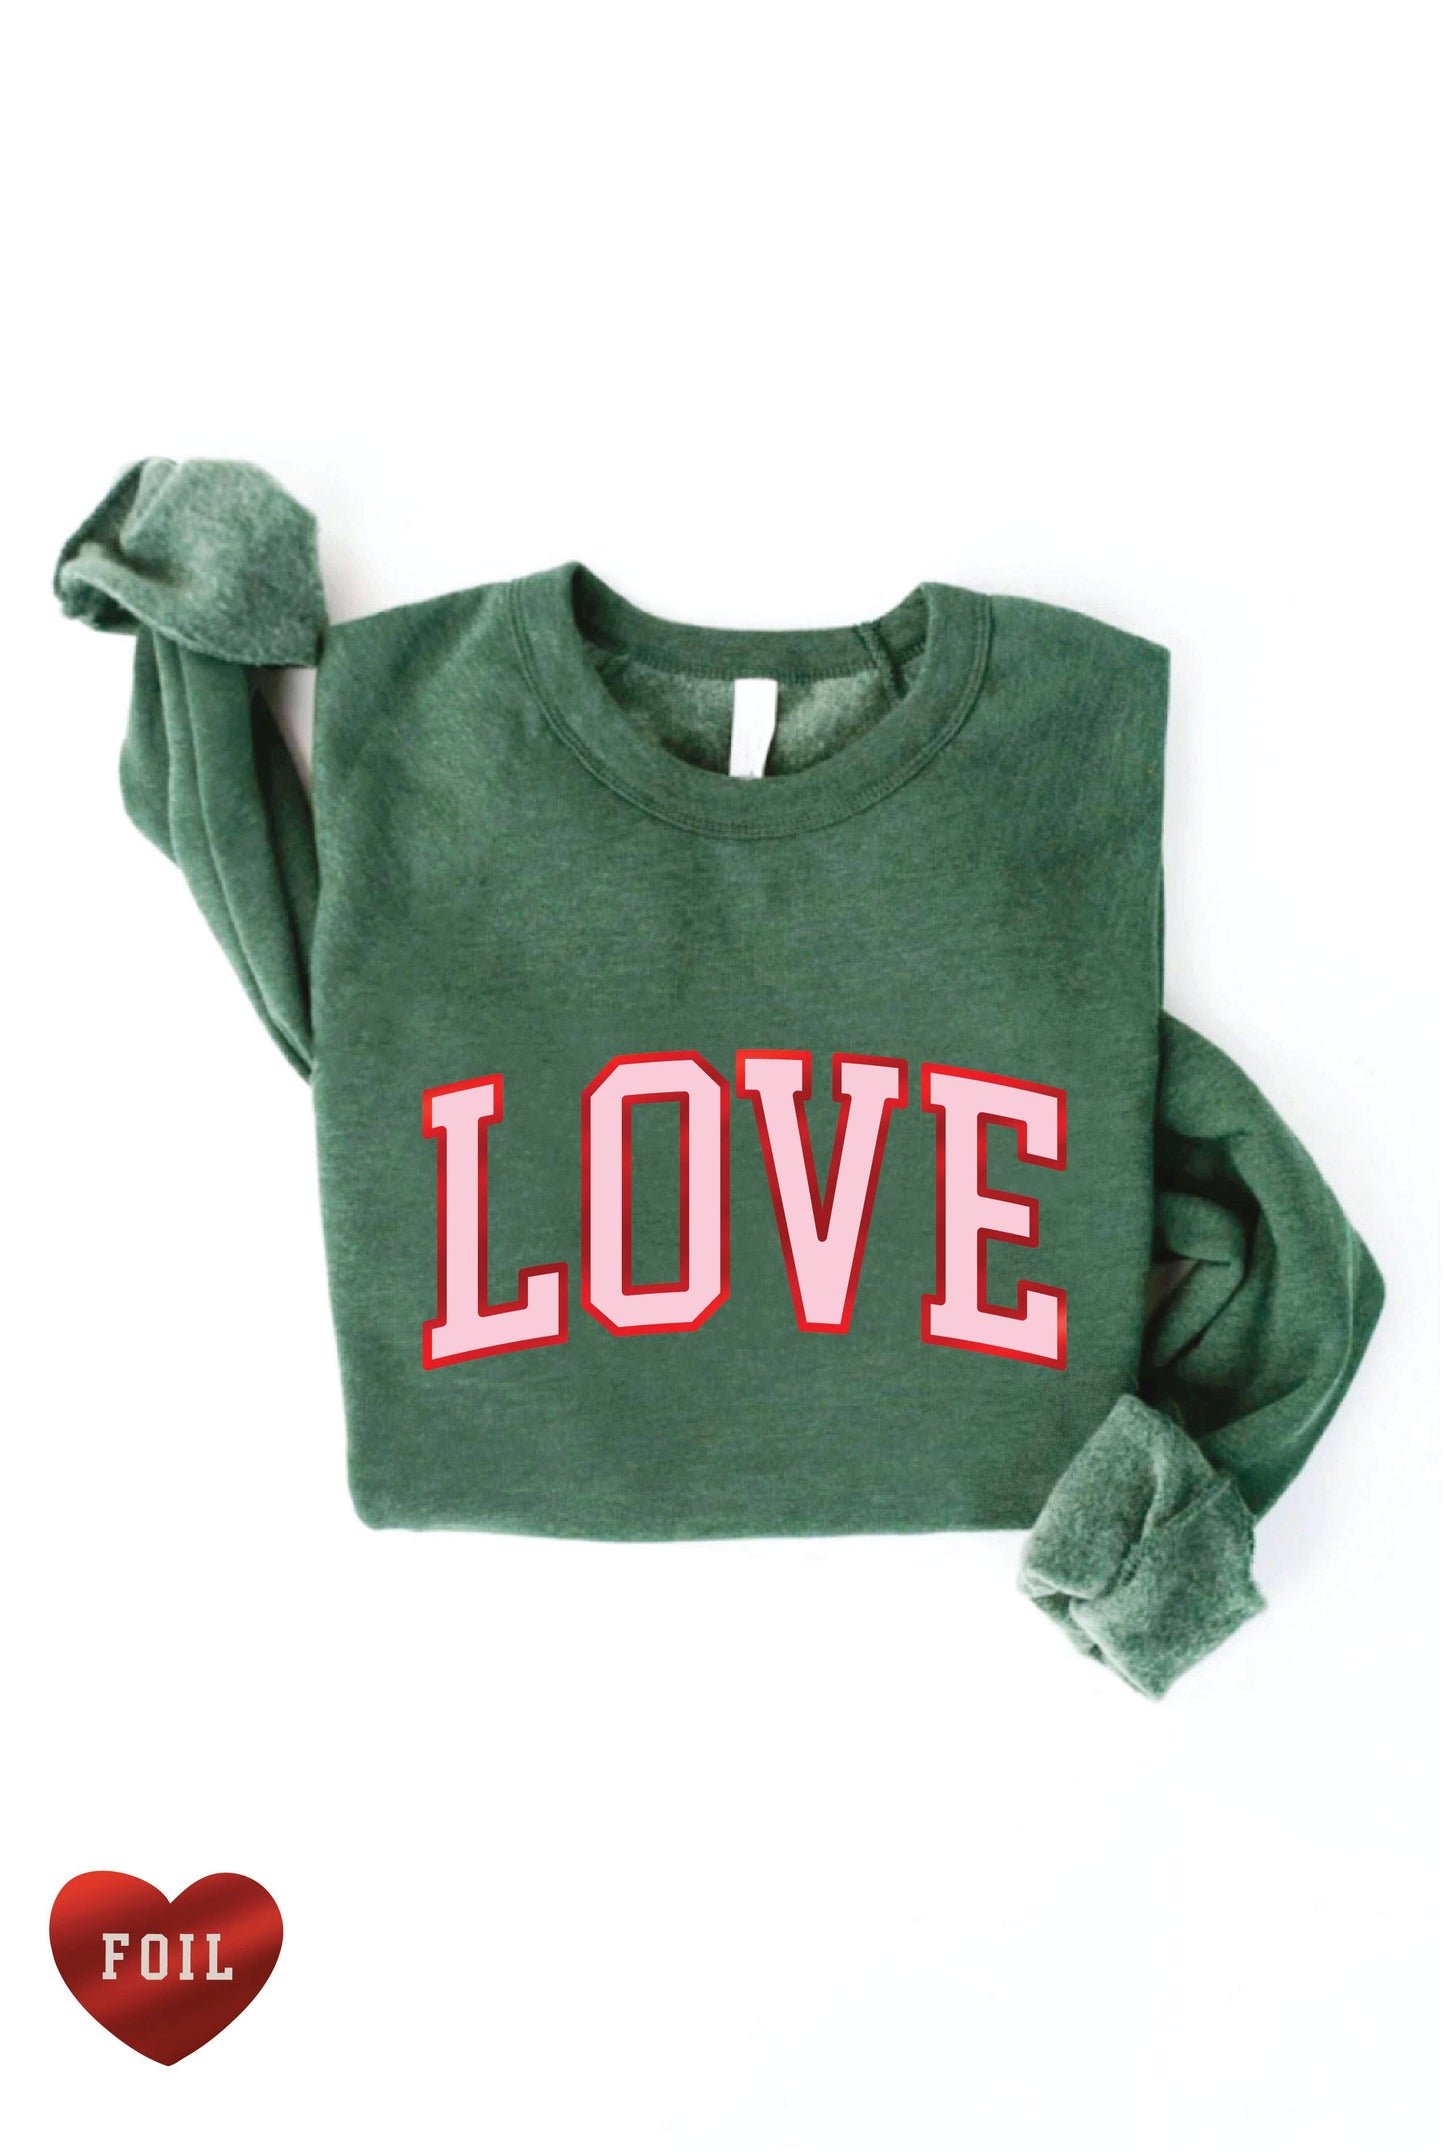 LOVE FOIL Graphic Sweatshirt: S / ROSE